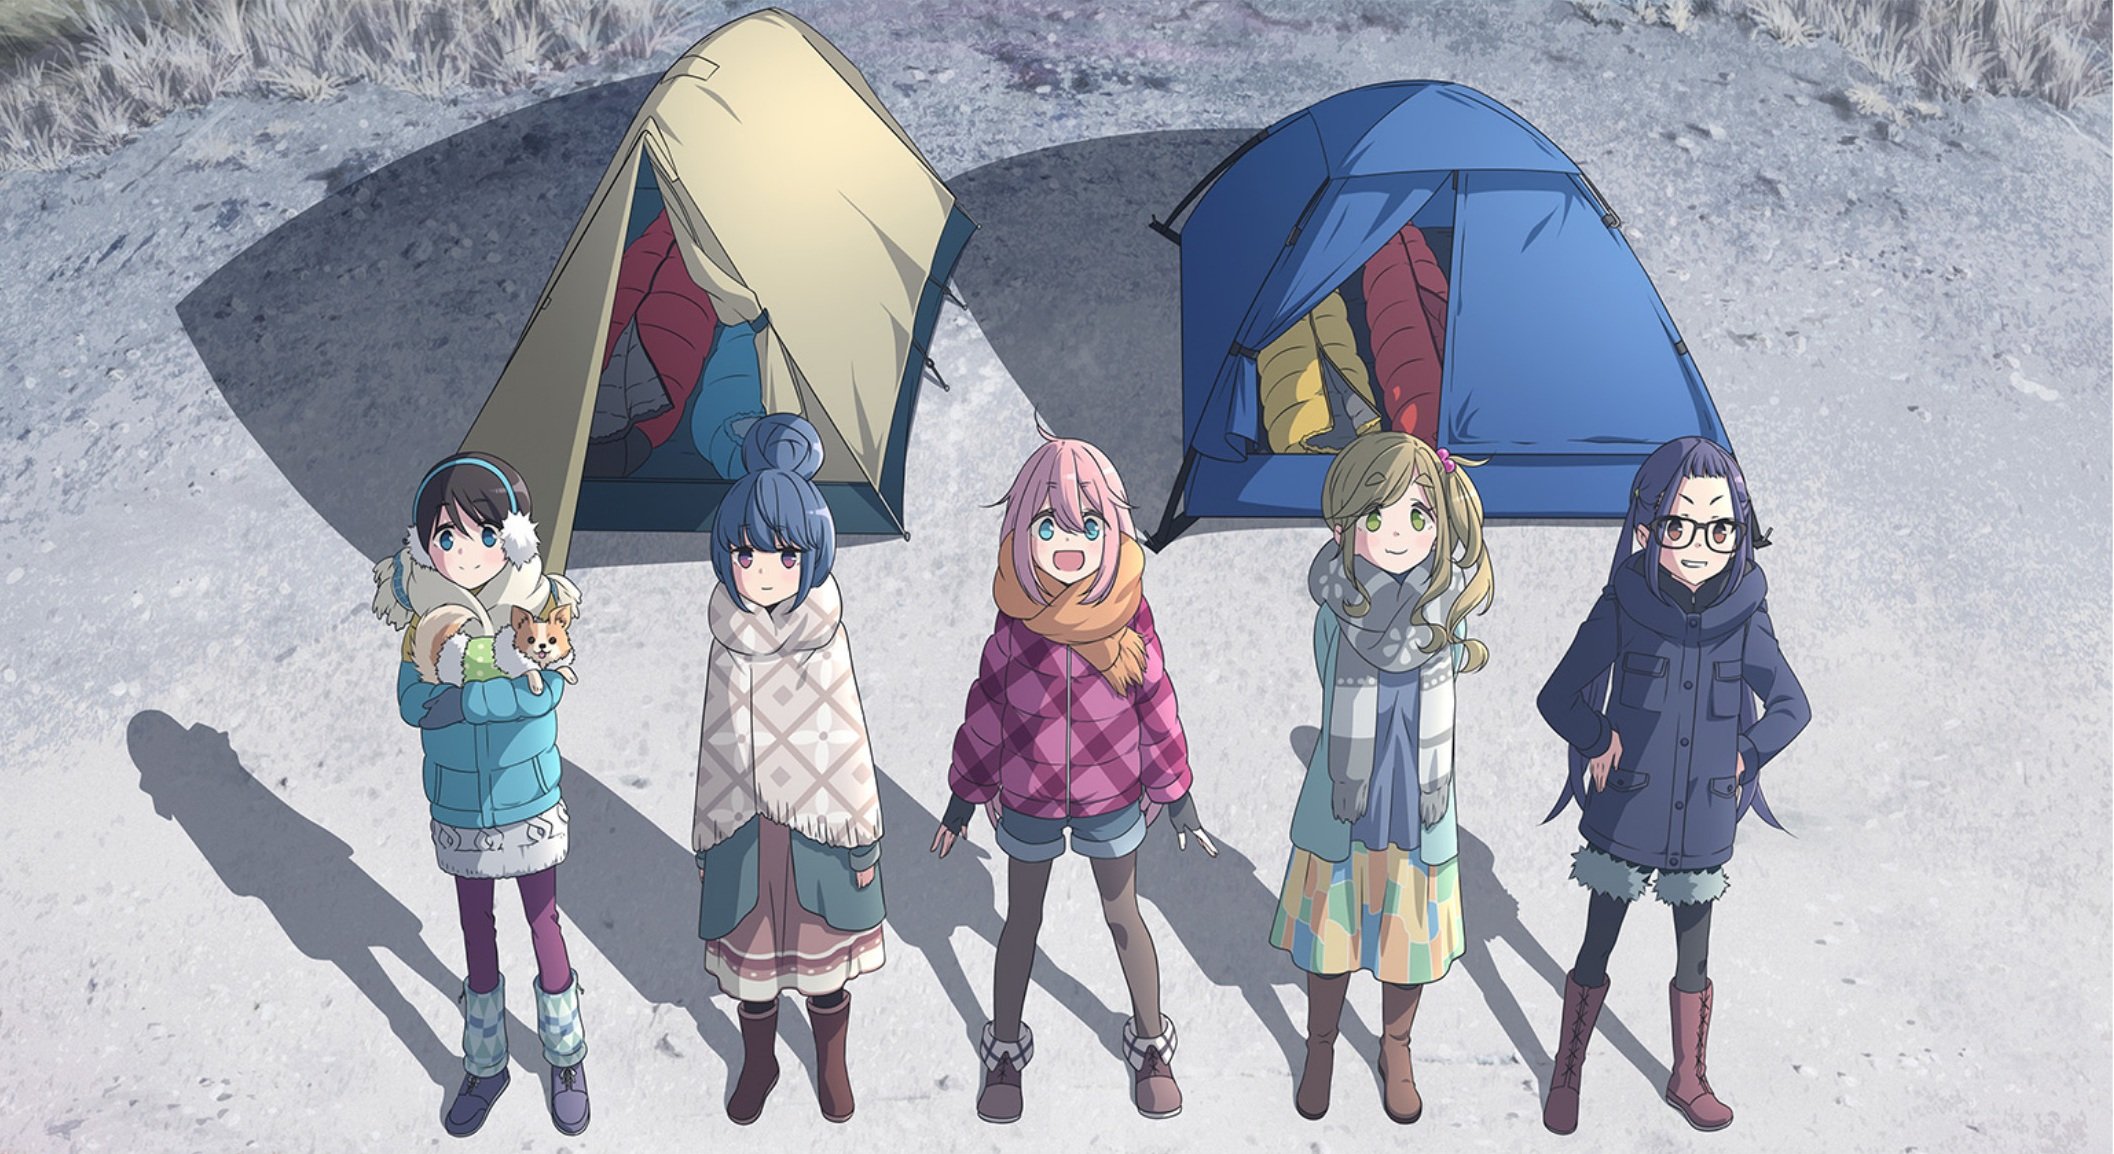 Yuru camping